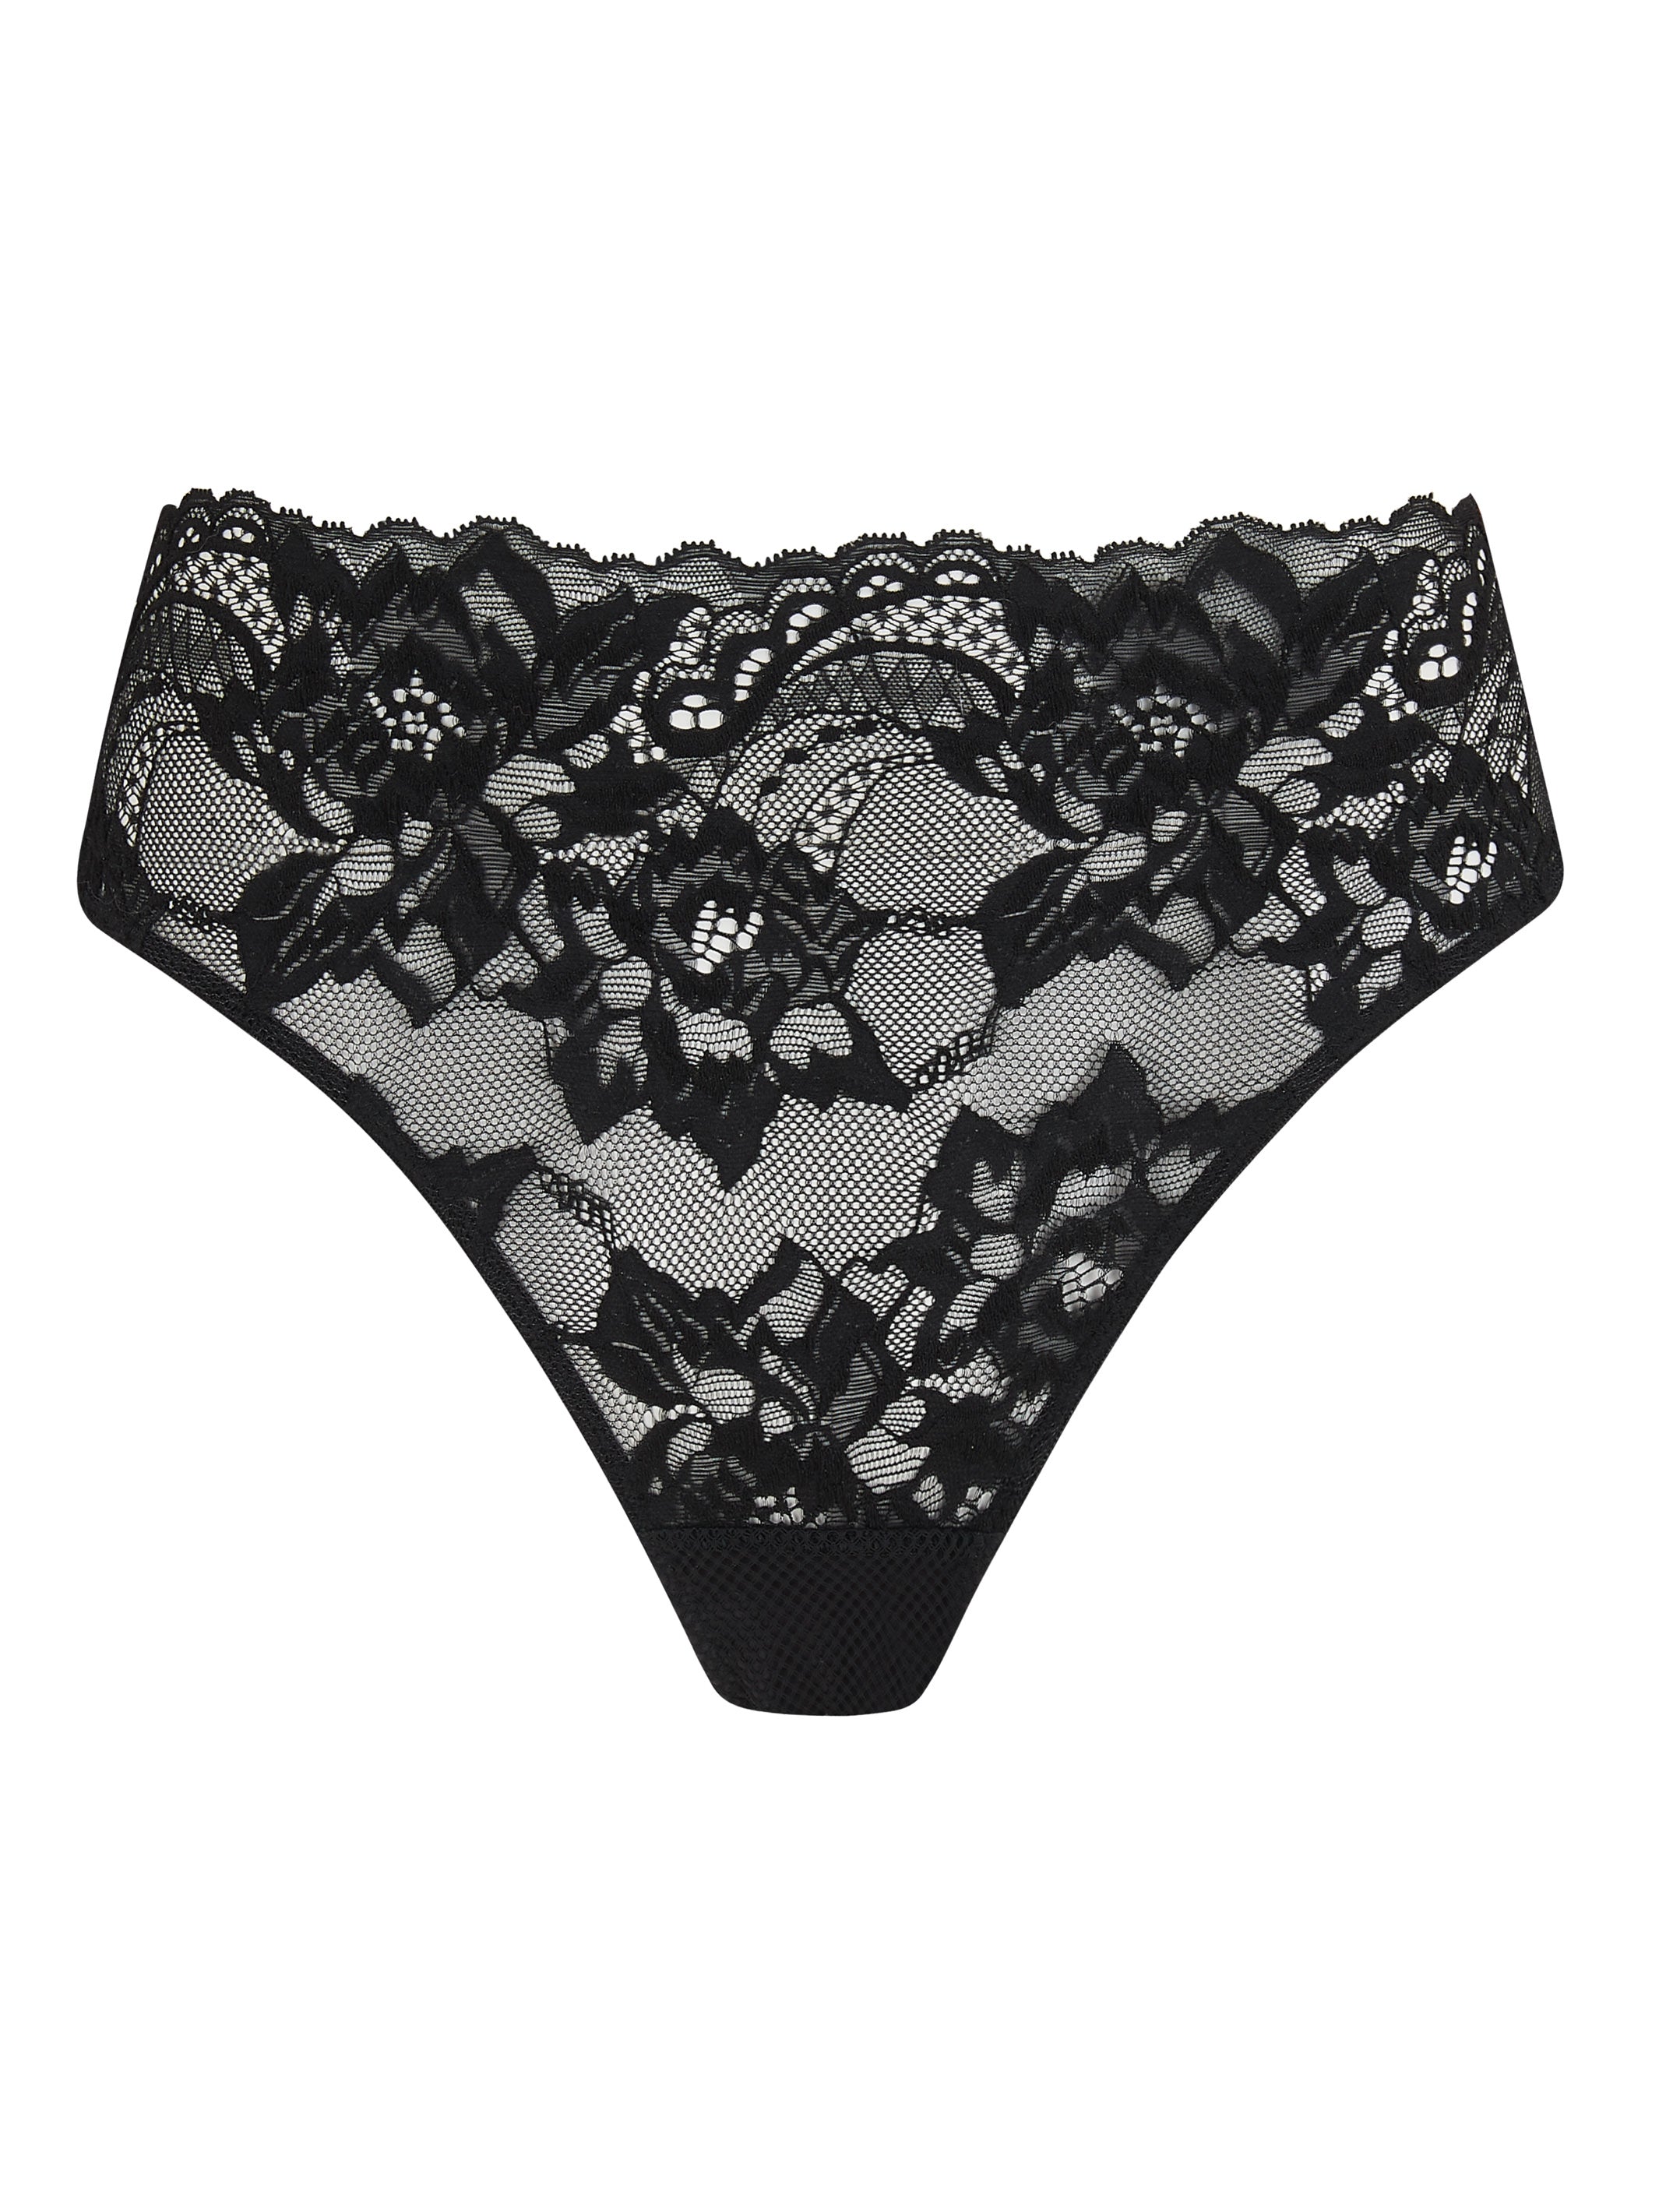 Stylish panty with lace insertion Stefania Black